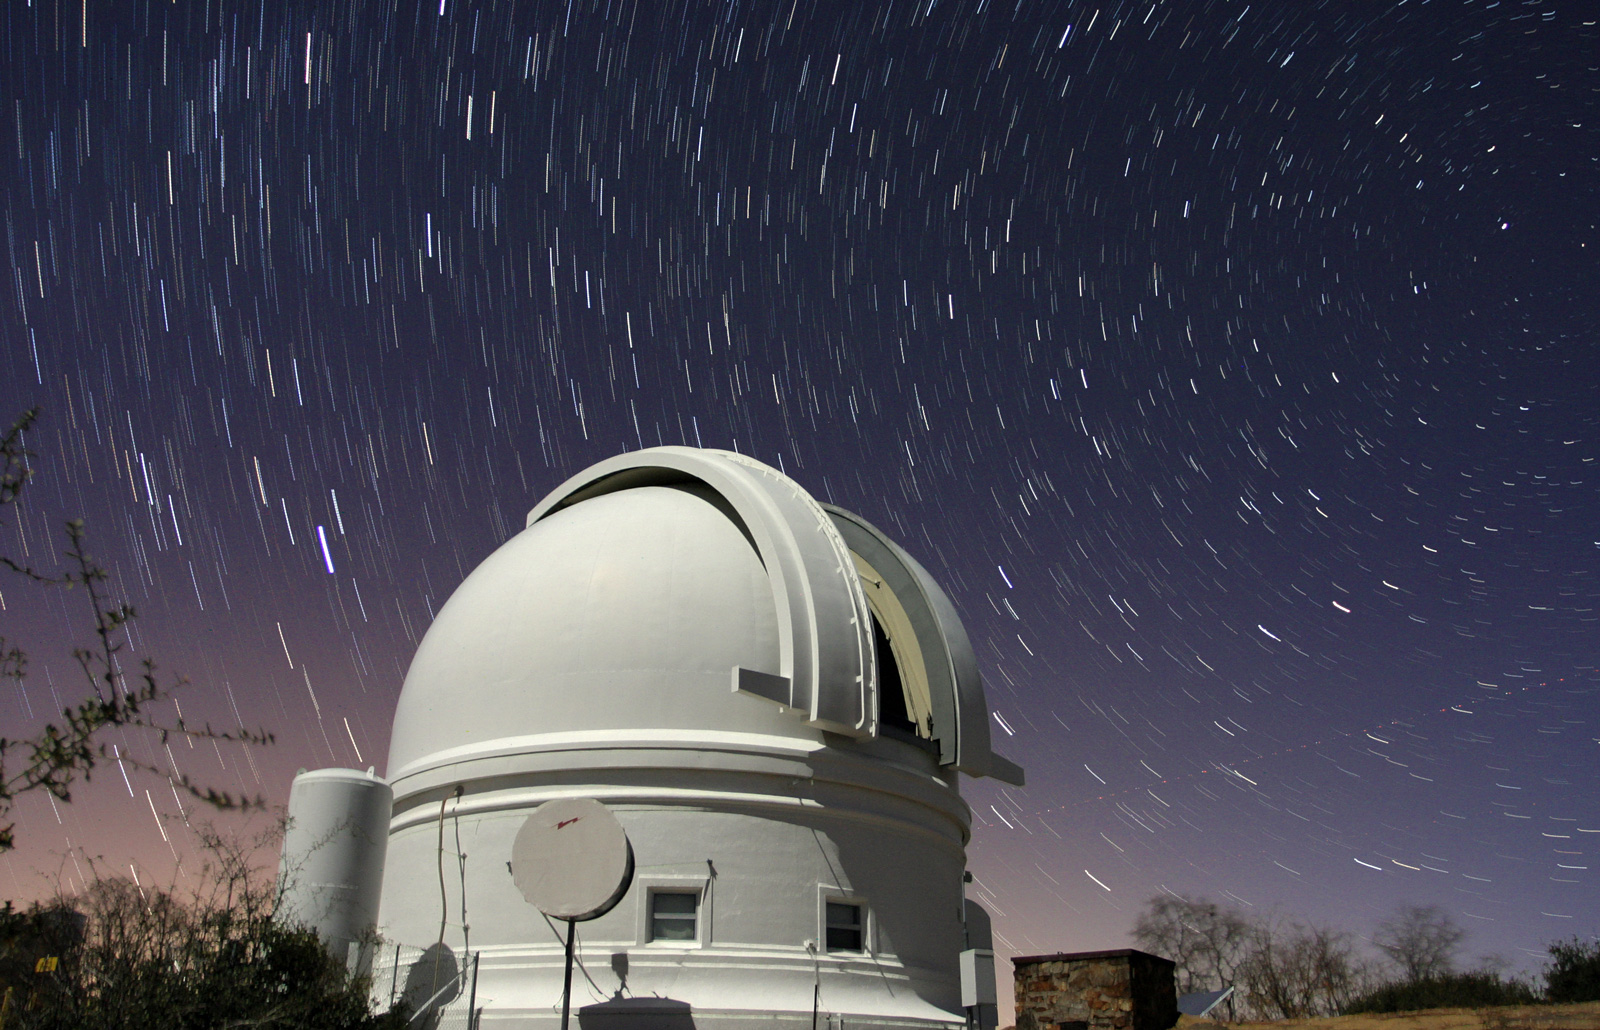 Star trails over Palomar Schmidt Dome